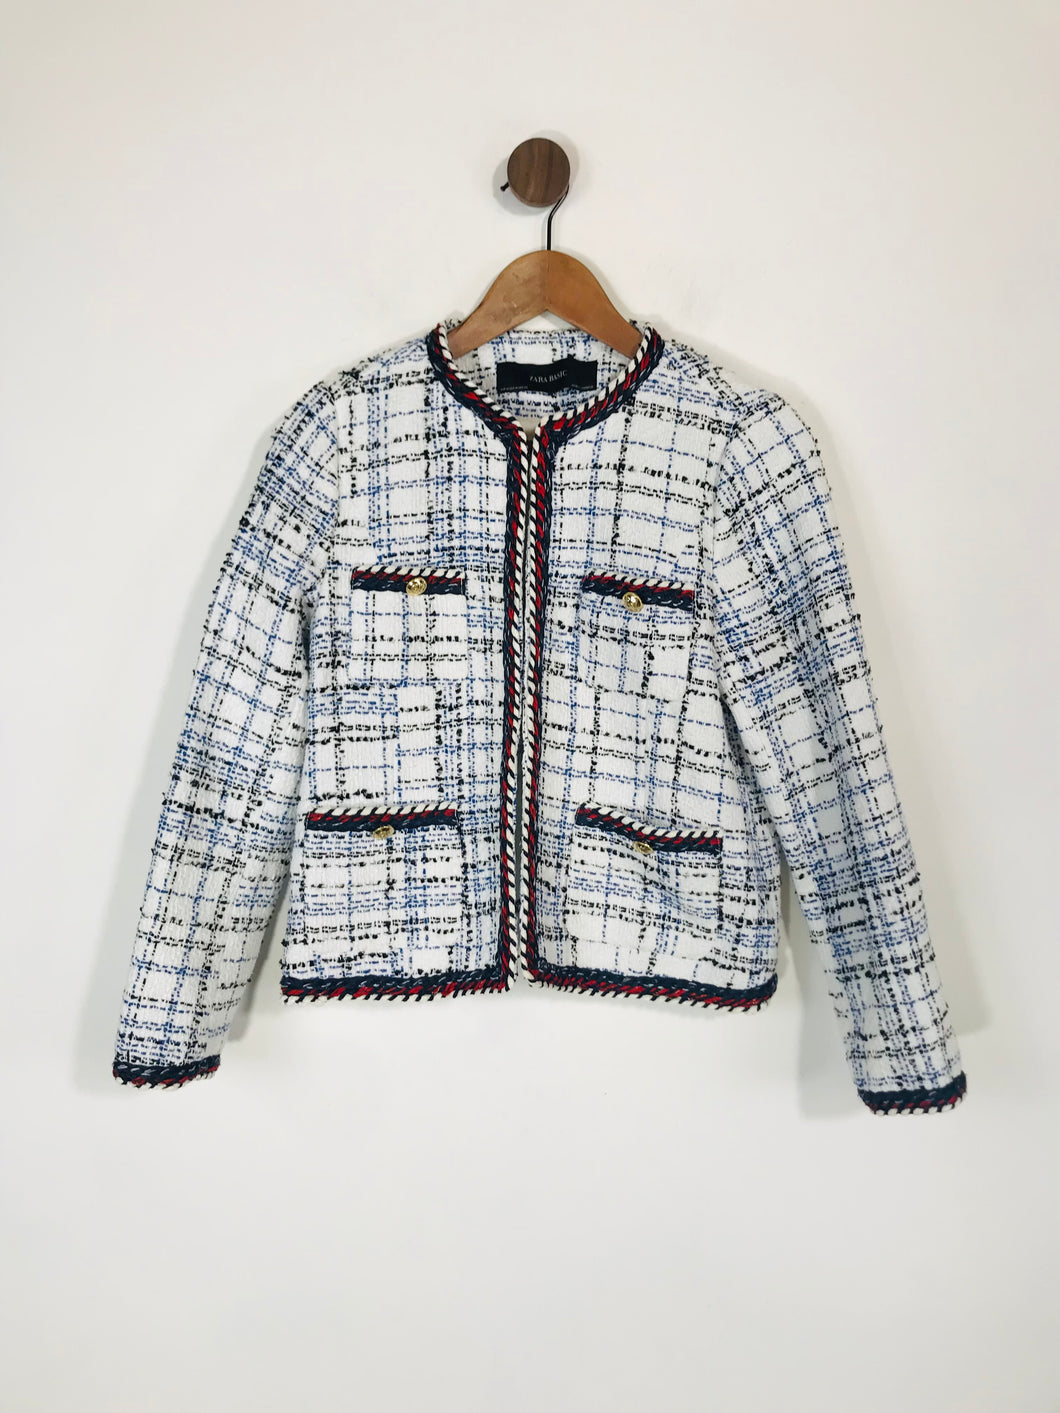 Zara Women's Check Tweed Blazer Jacket | M UK10-12 | White